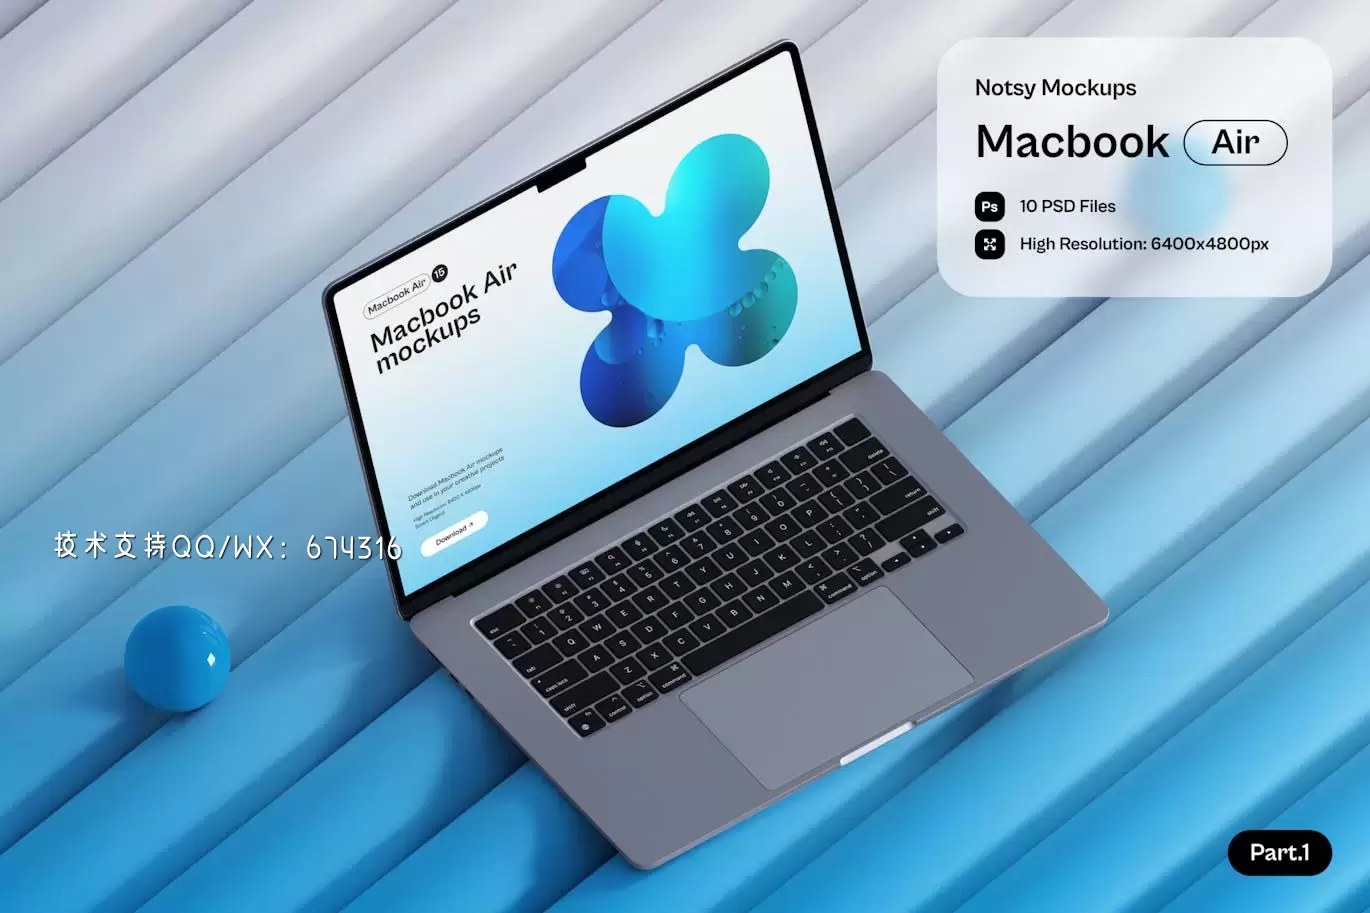 Macbook Air 电脑模型样机第 1 部分 (PSD,PNG)免费下载